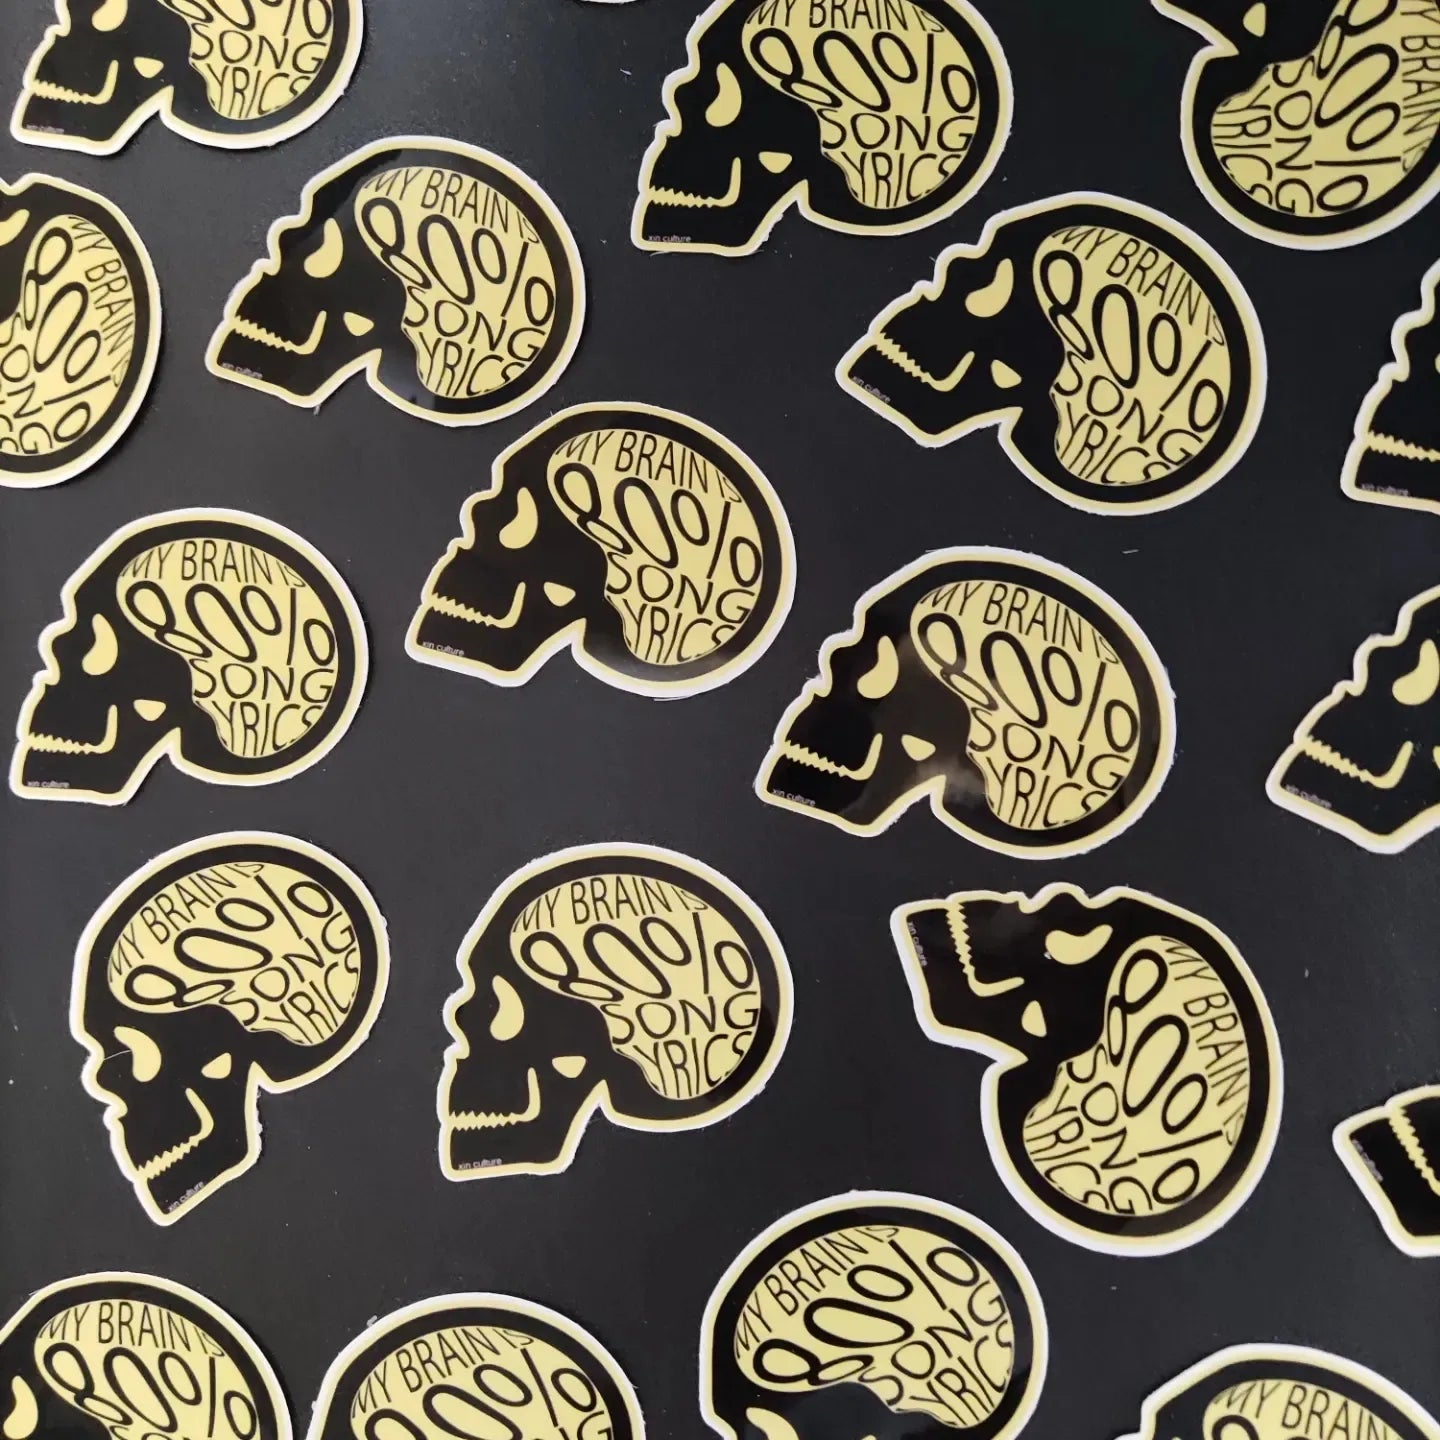 Skull "My brain is 80% song lyrics" sticker